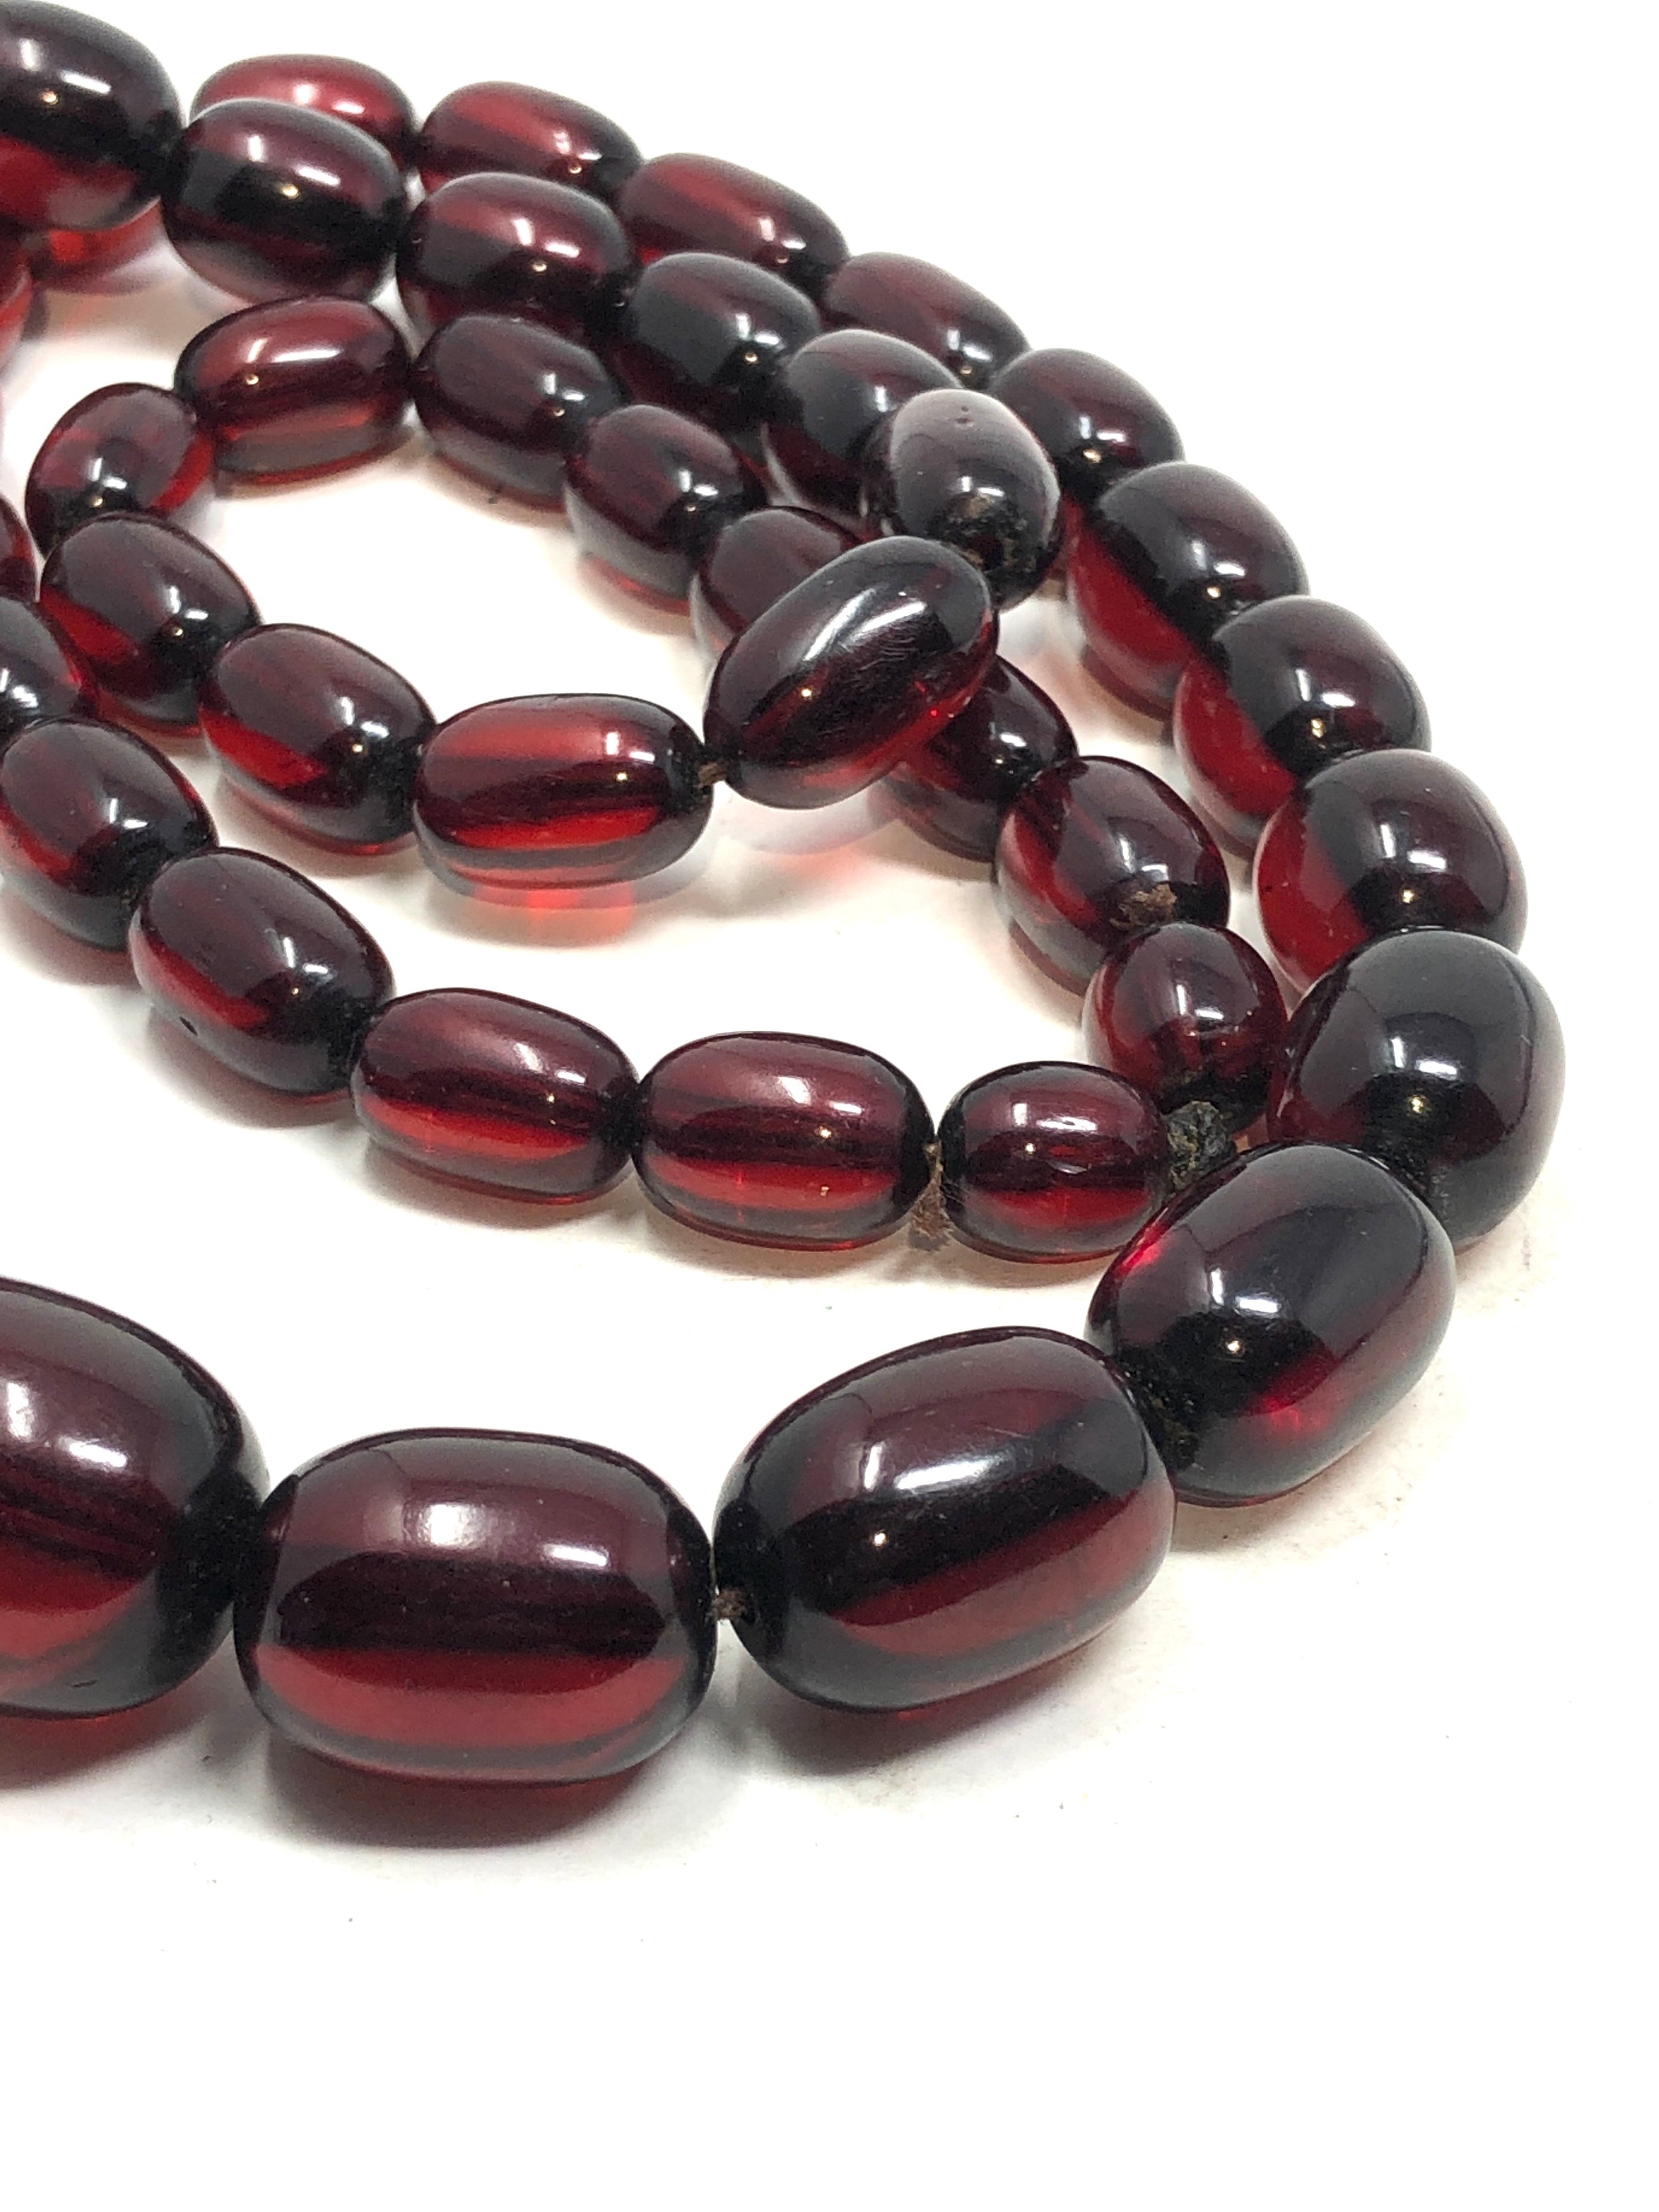 Antique prystal cherry bakelite bead graduated necklace (107g) - Image 3 of 3